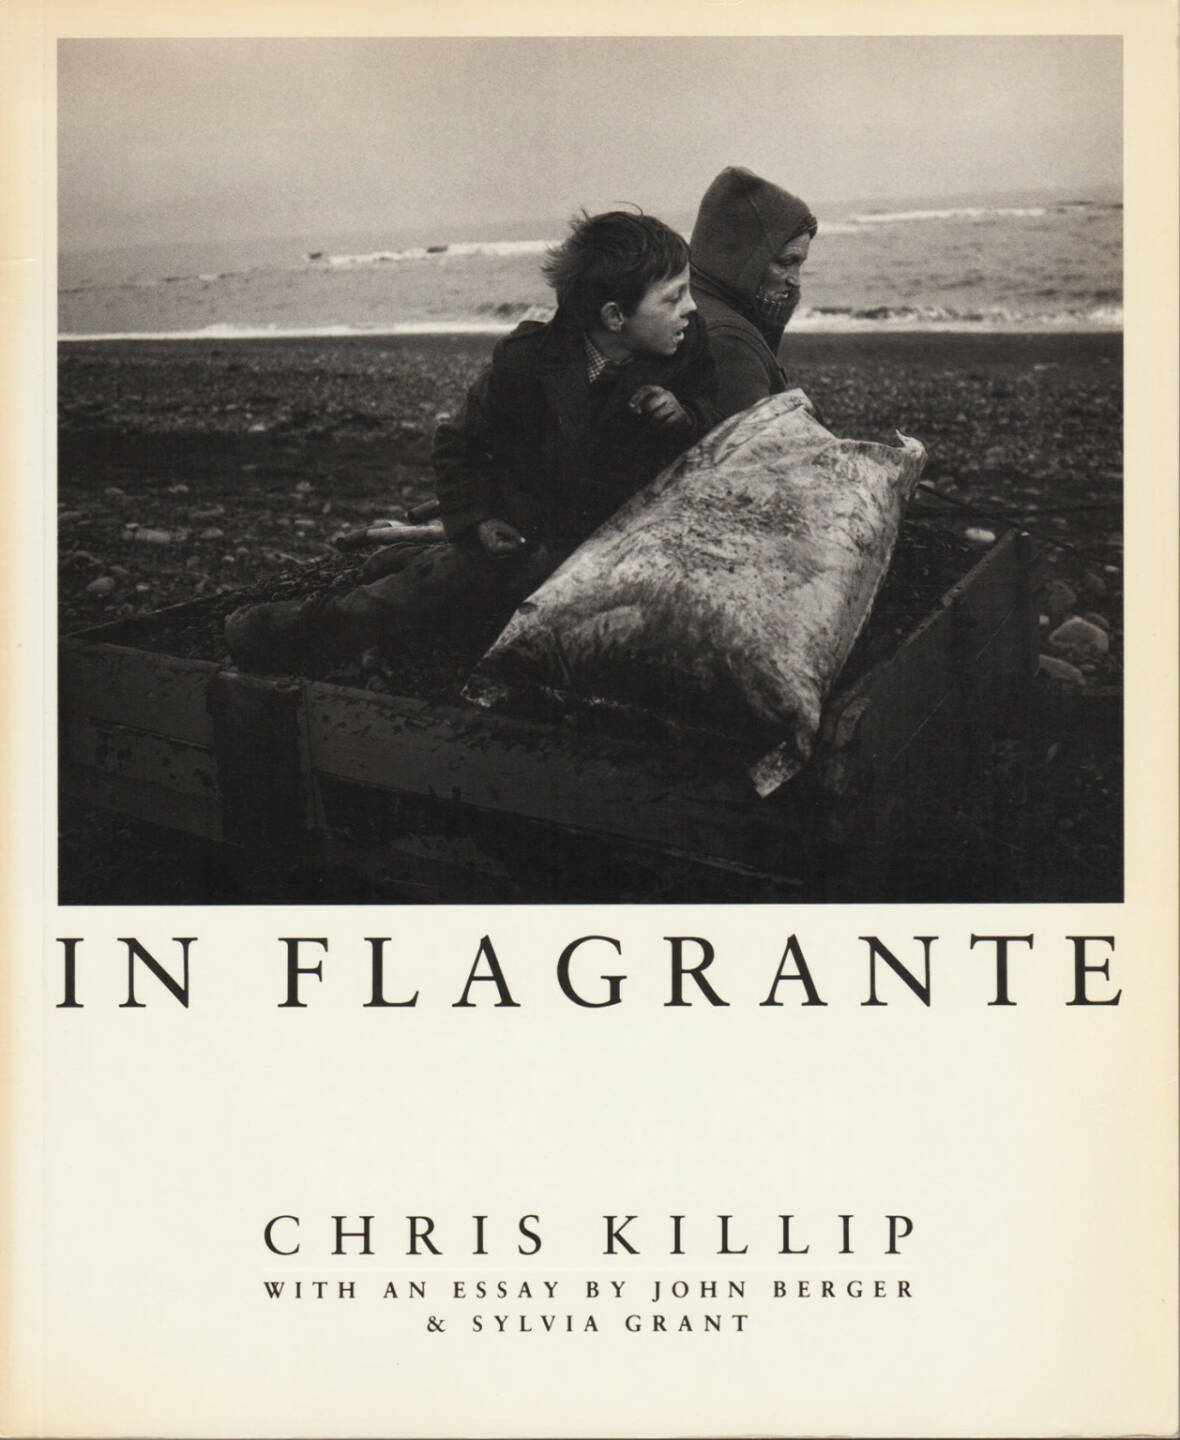 Chris Killip - In Flagrante, Preis: 300-600 Euro http://josefchladek.com/book/chris_killip_-_in_flagrante